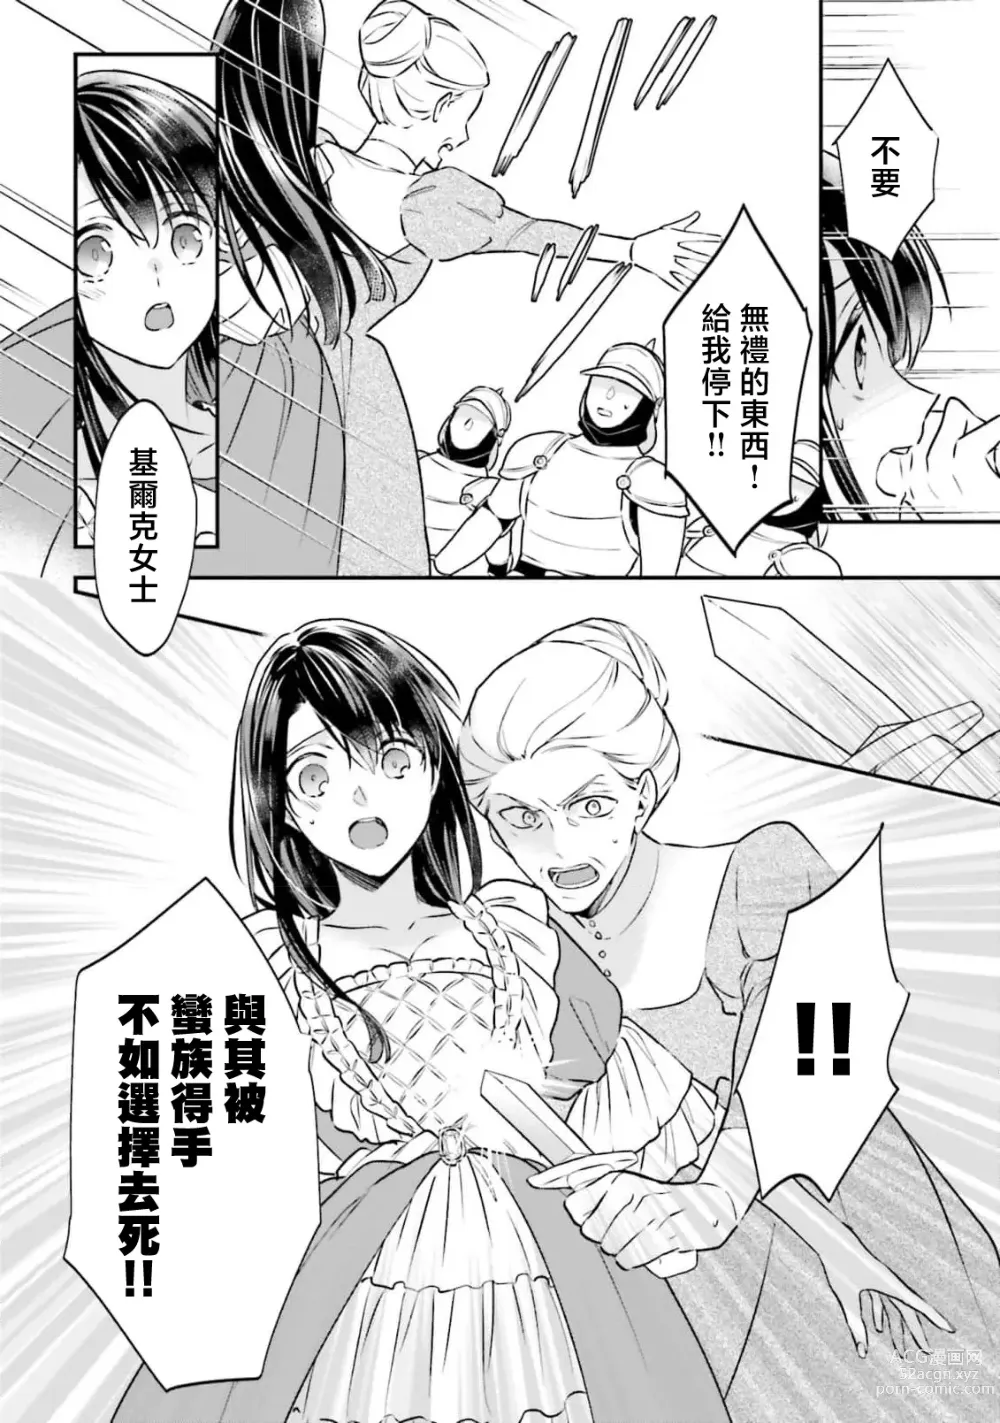 Page 22 of manga 在异世界成为了替身公主被霸王掳走了 1-6